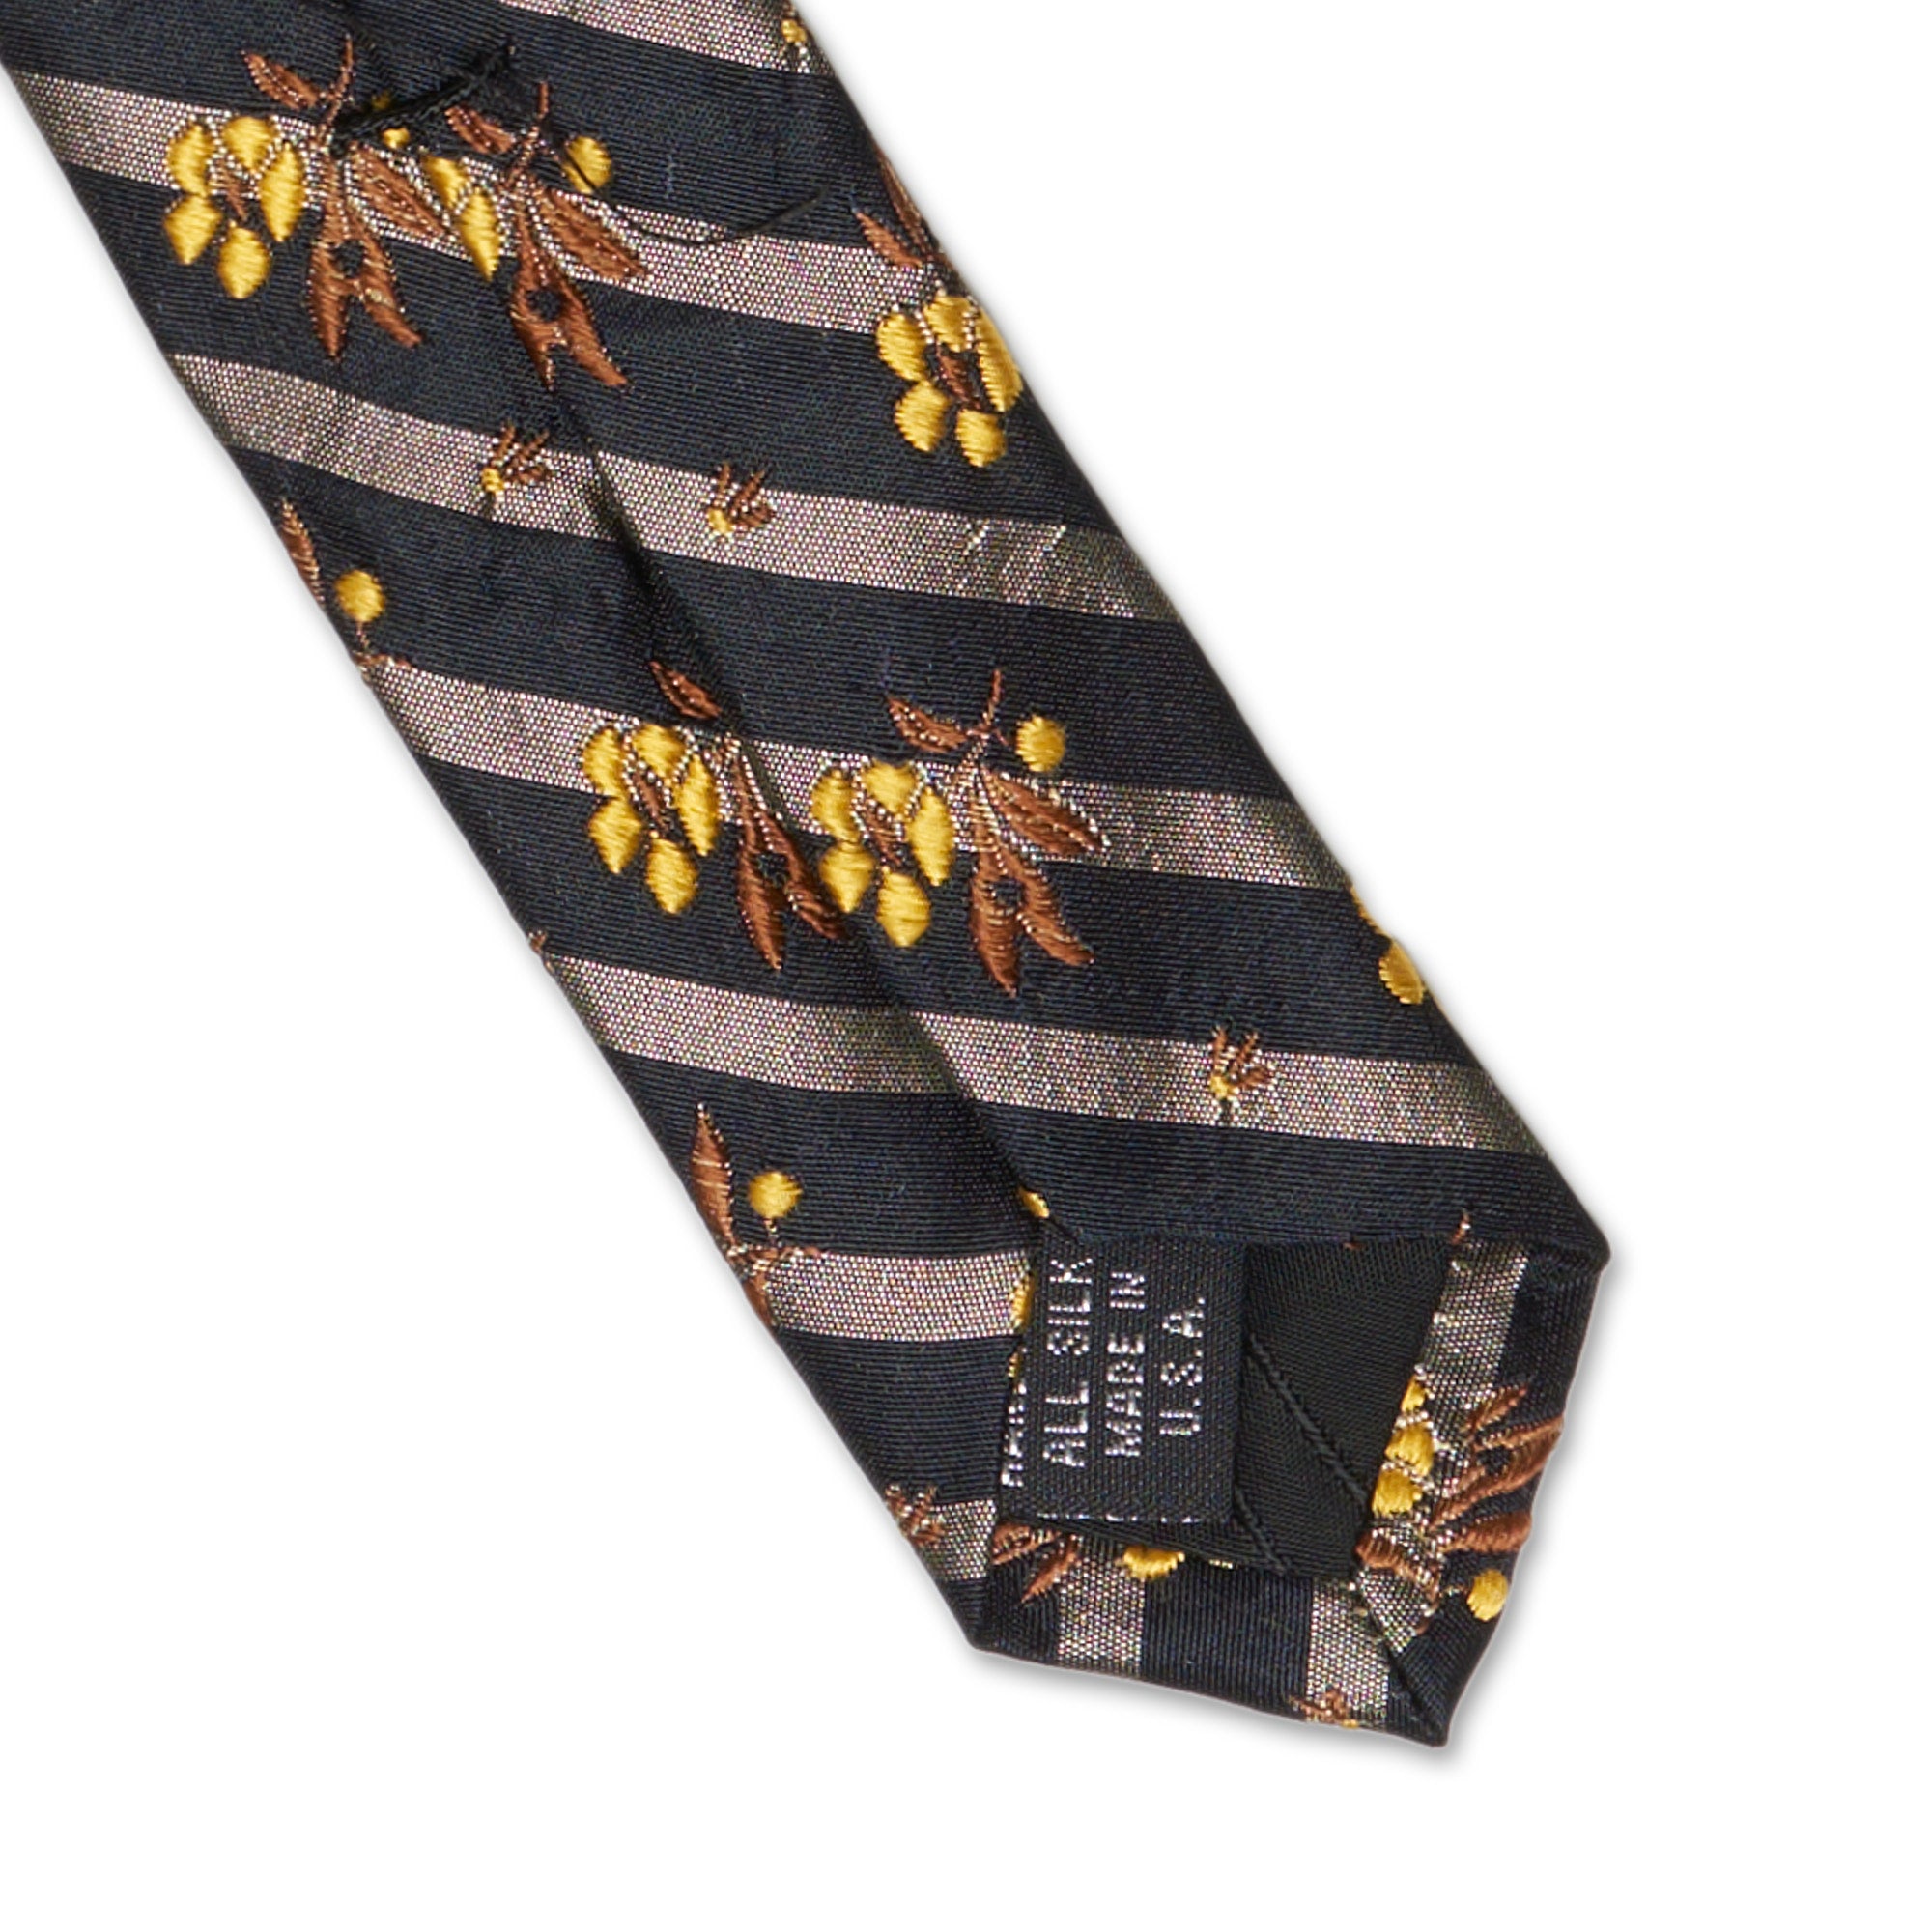 JAY KOS New York Handmade Black Striped Floral Design Silk Tie